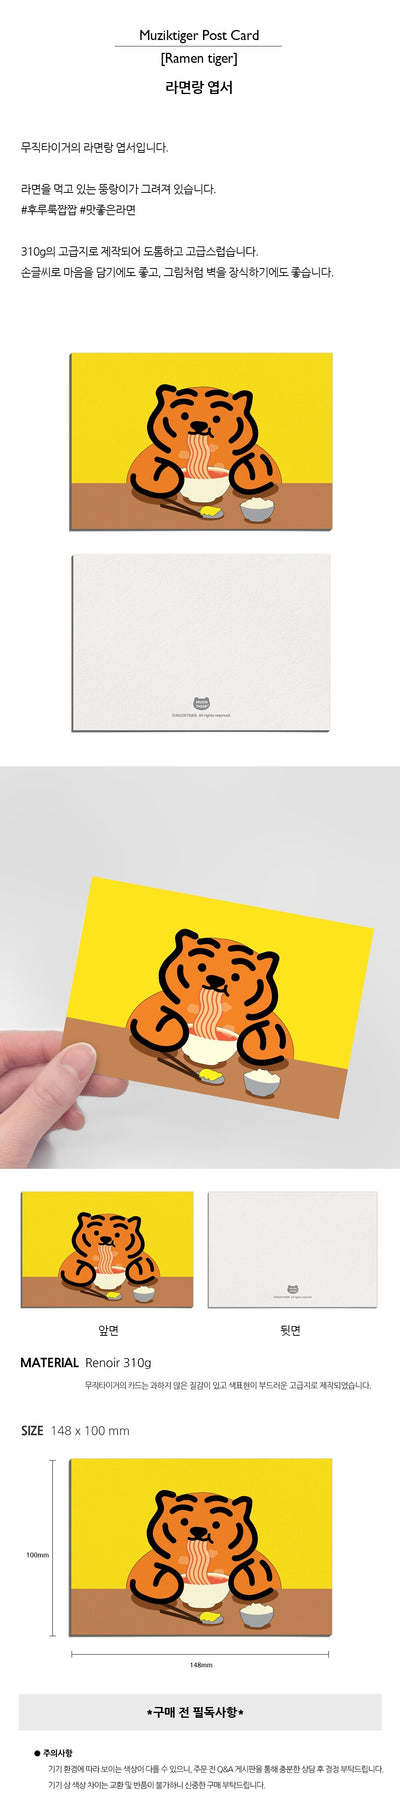 Ramen tiger postcard